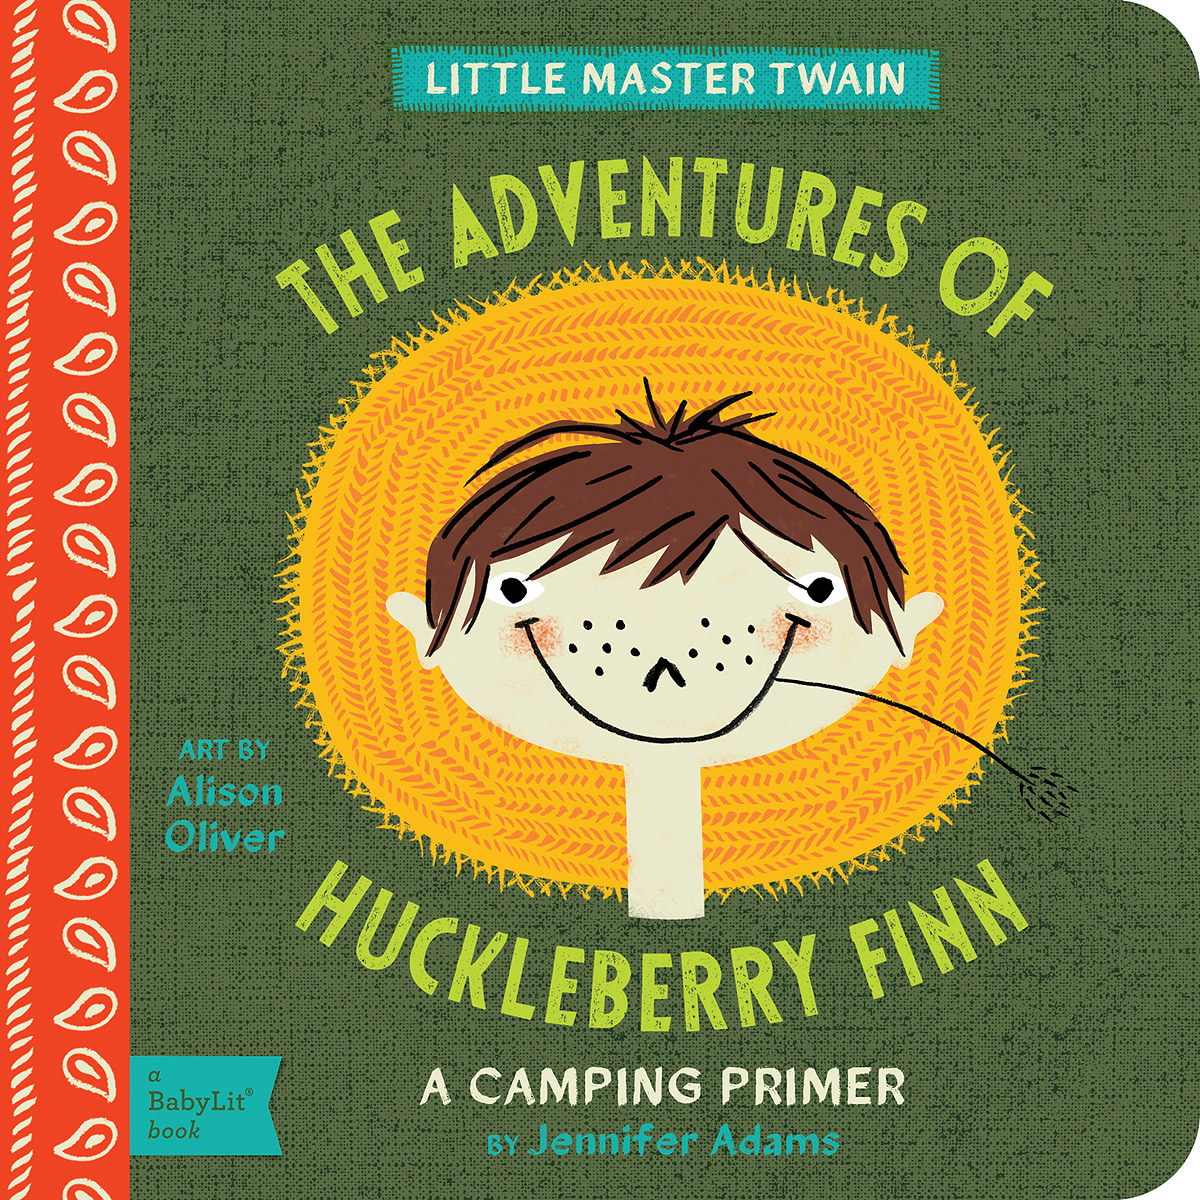 Little Master Twain: The Adventures of Huckleberry Finn